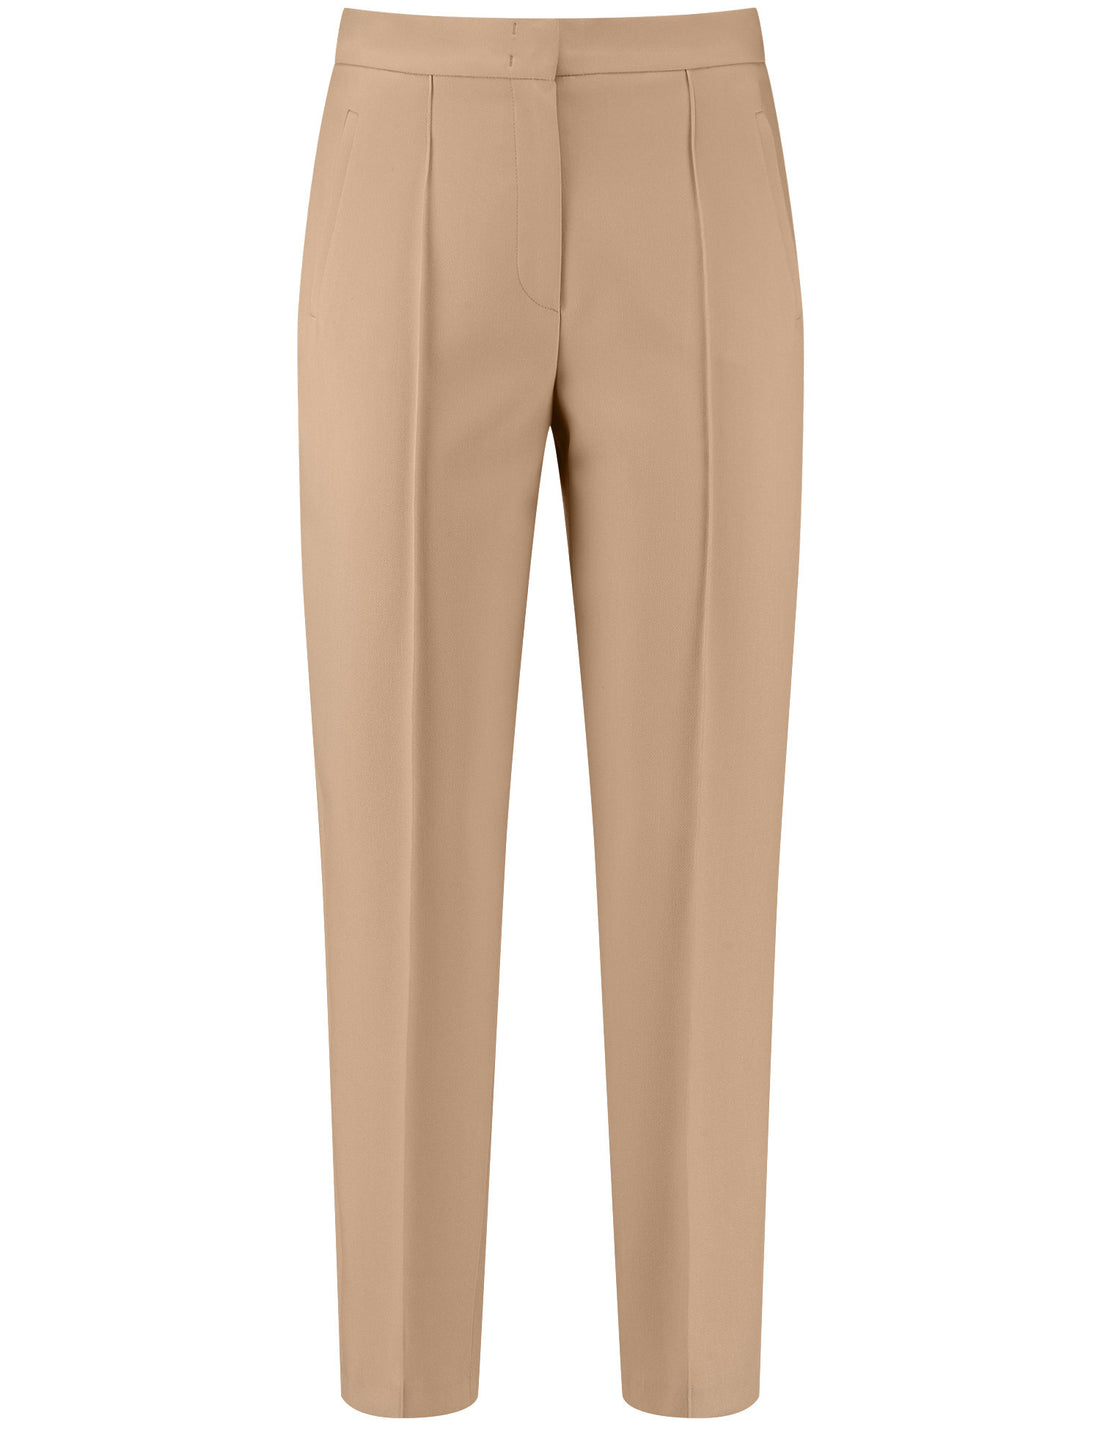 Elegant 7/8-Length Stretch Trousers_02